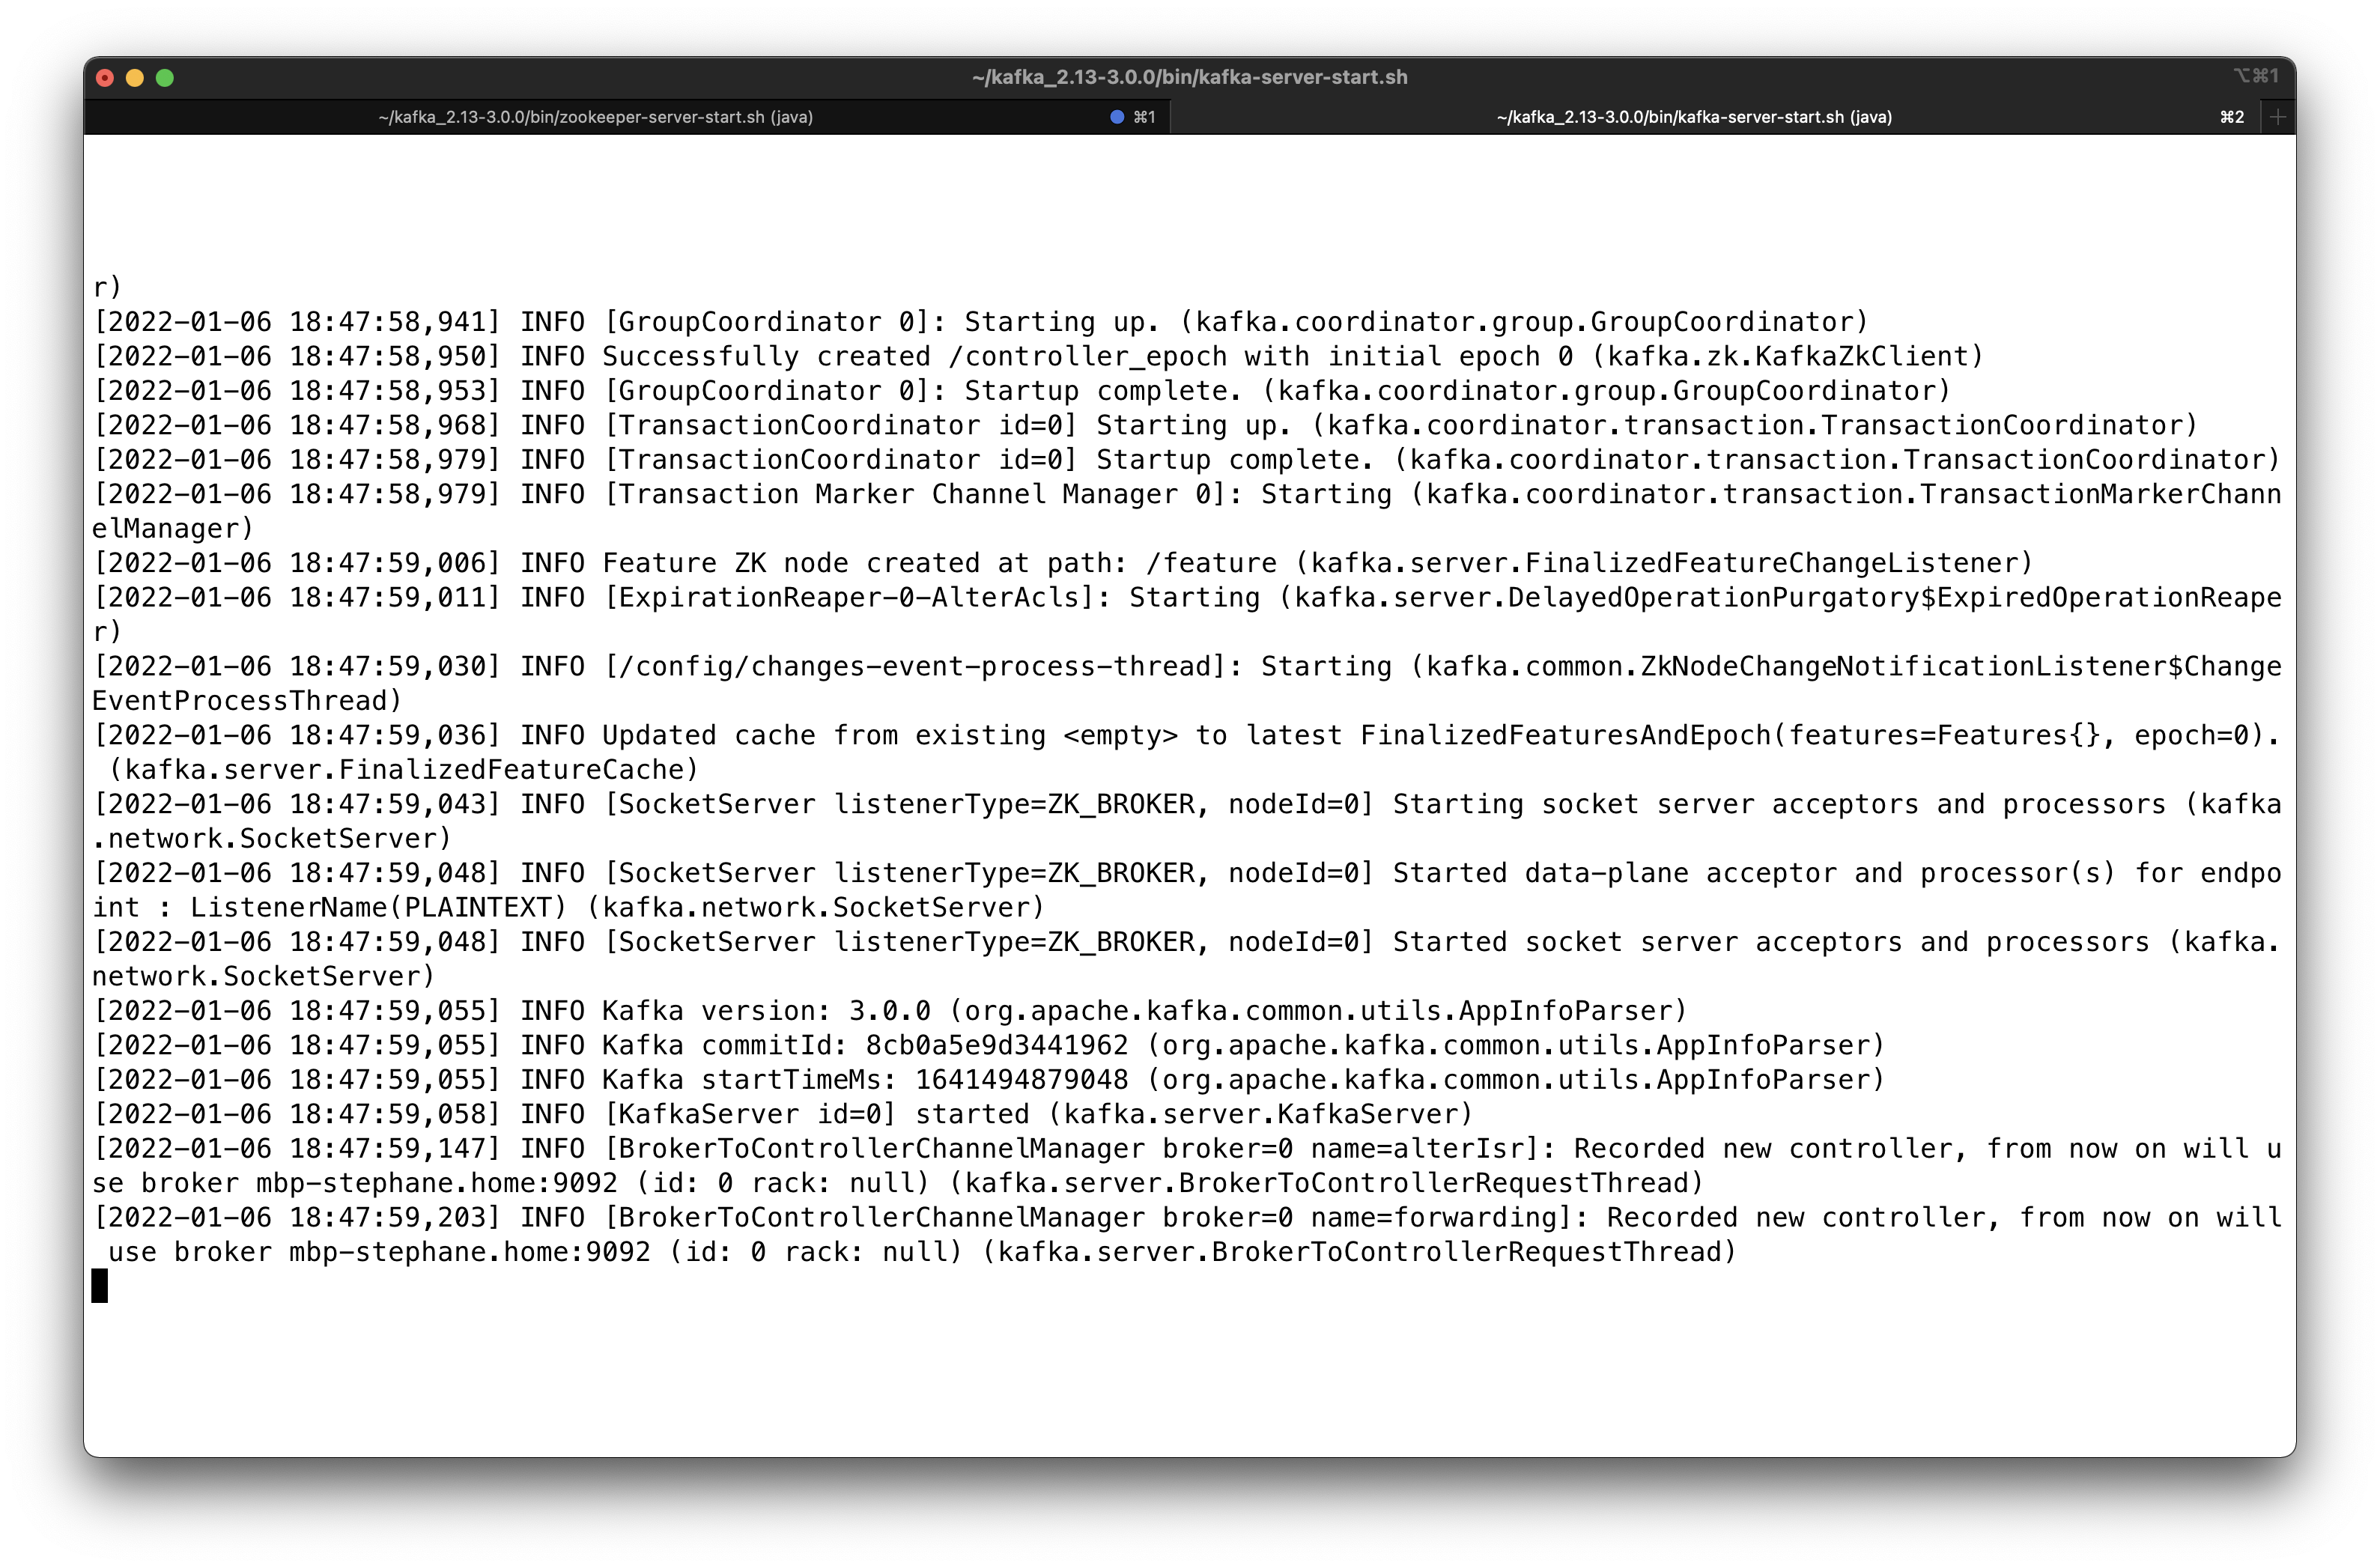 Terminal screenshot taken when starting Apache Kafka via Homebrew on Mac